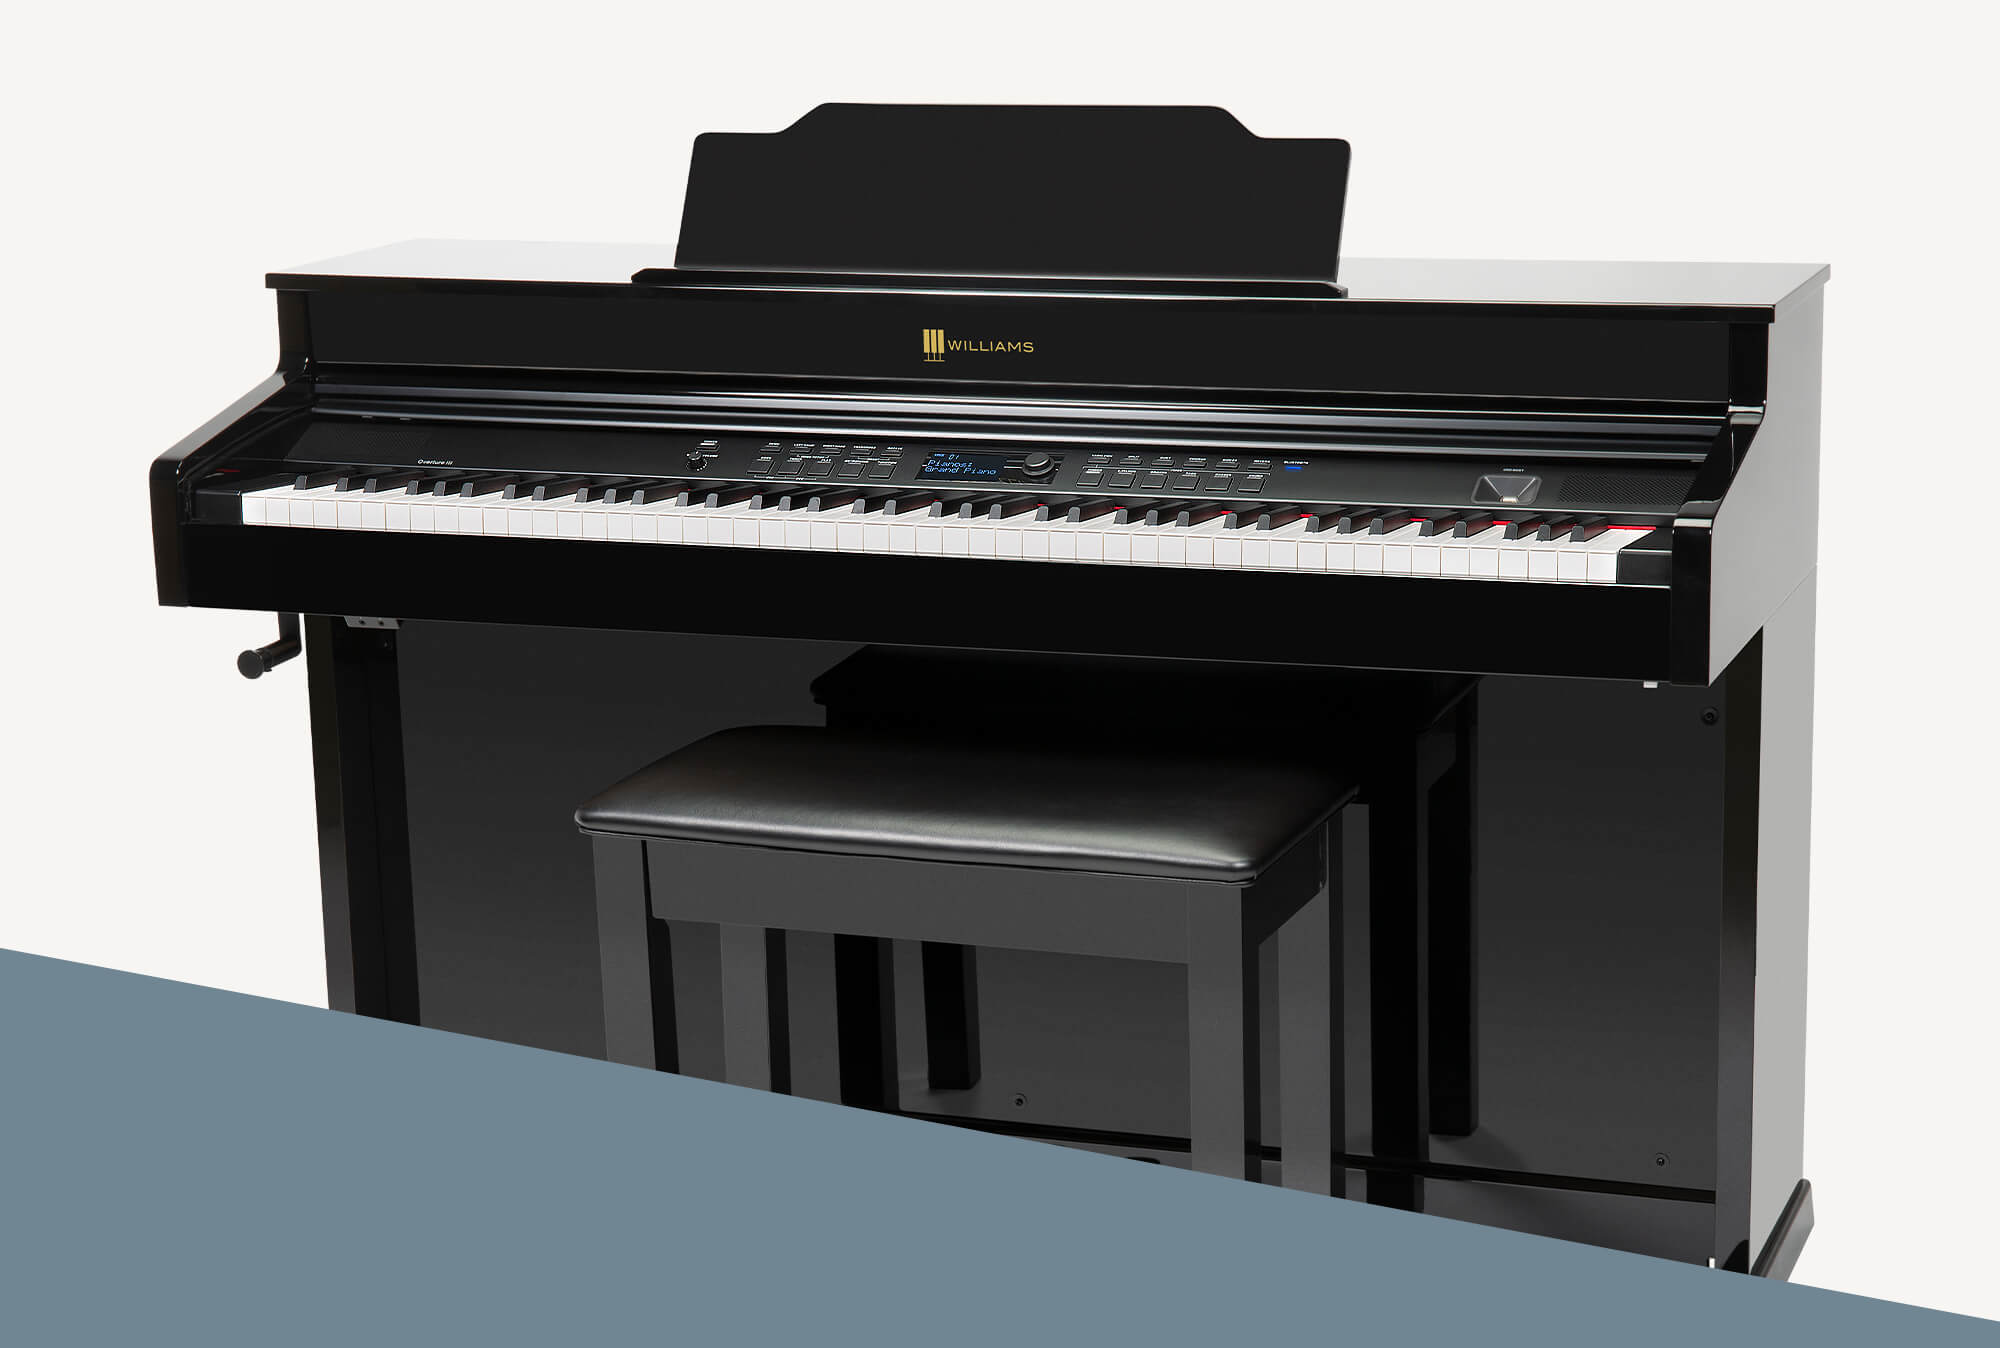 Williams Overture III digital console piano.